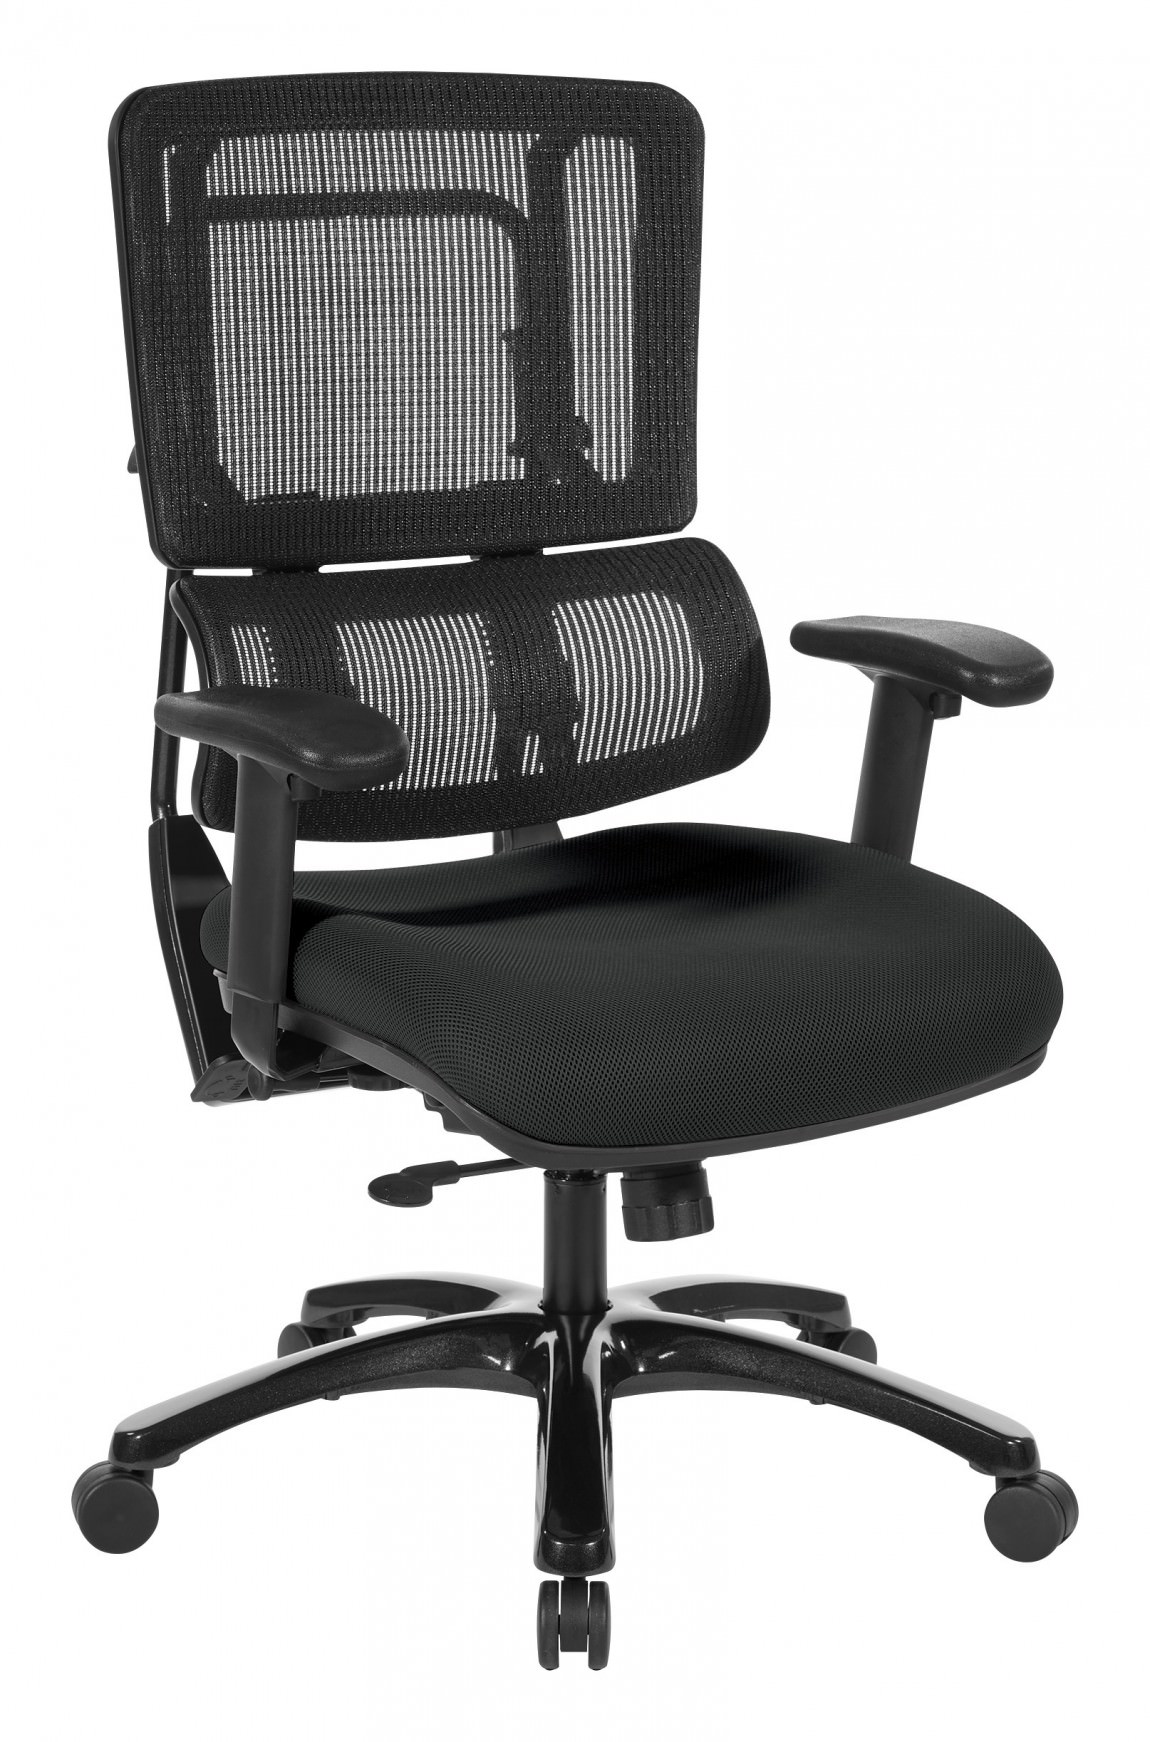 Tall Ergonomic Chair